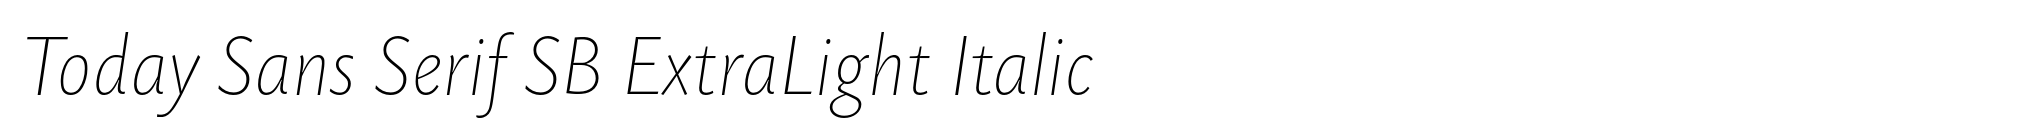 Today Sans Serif SB ExtraLight Italic image